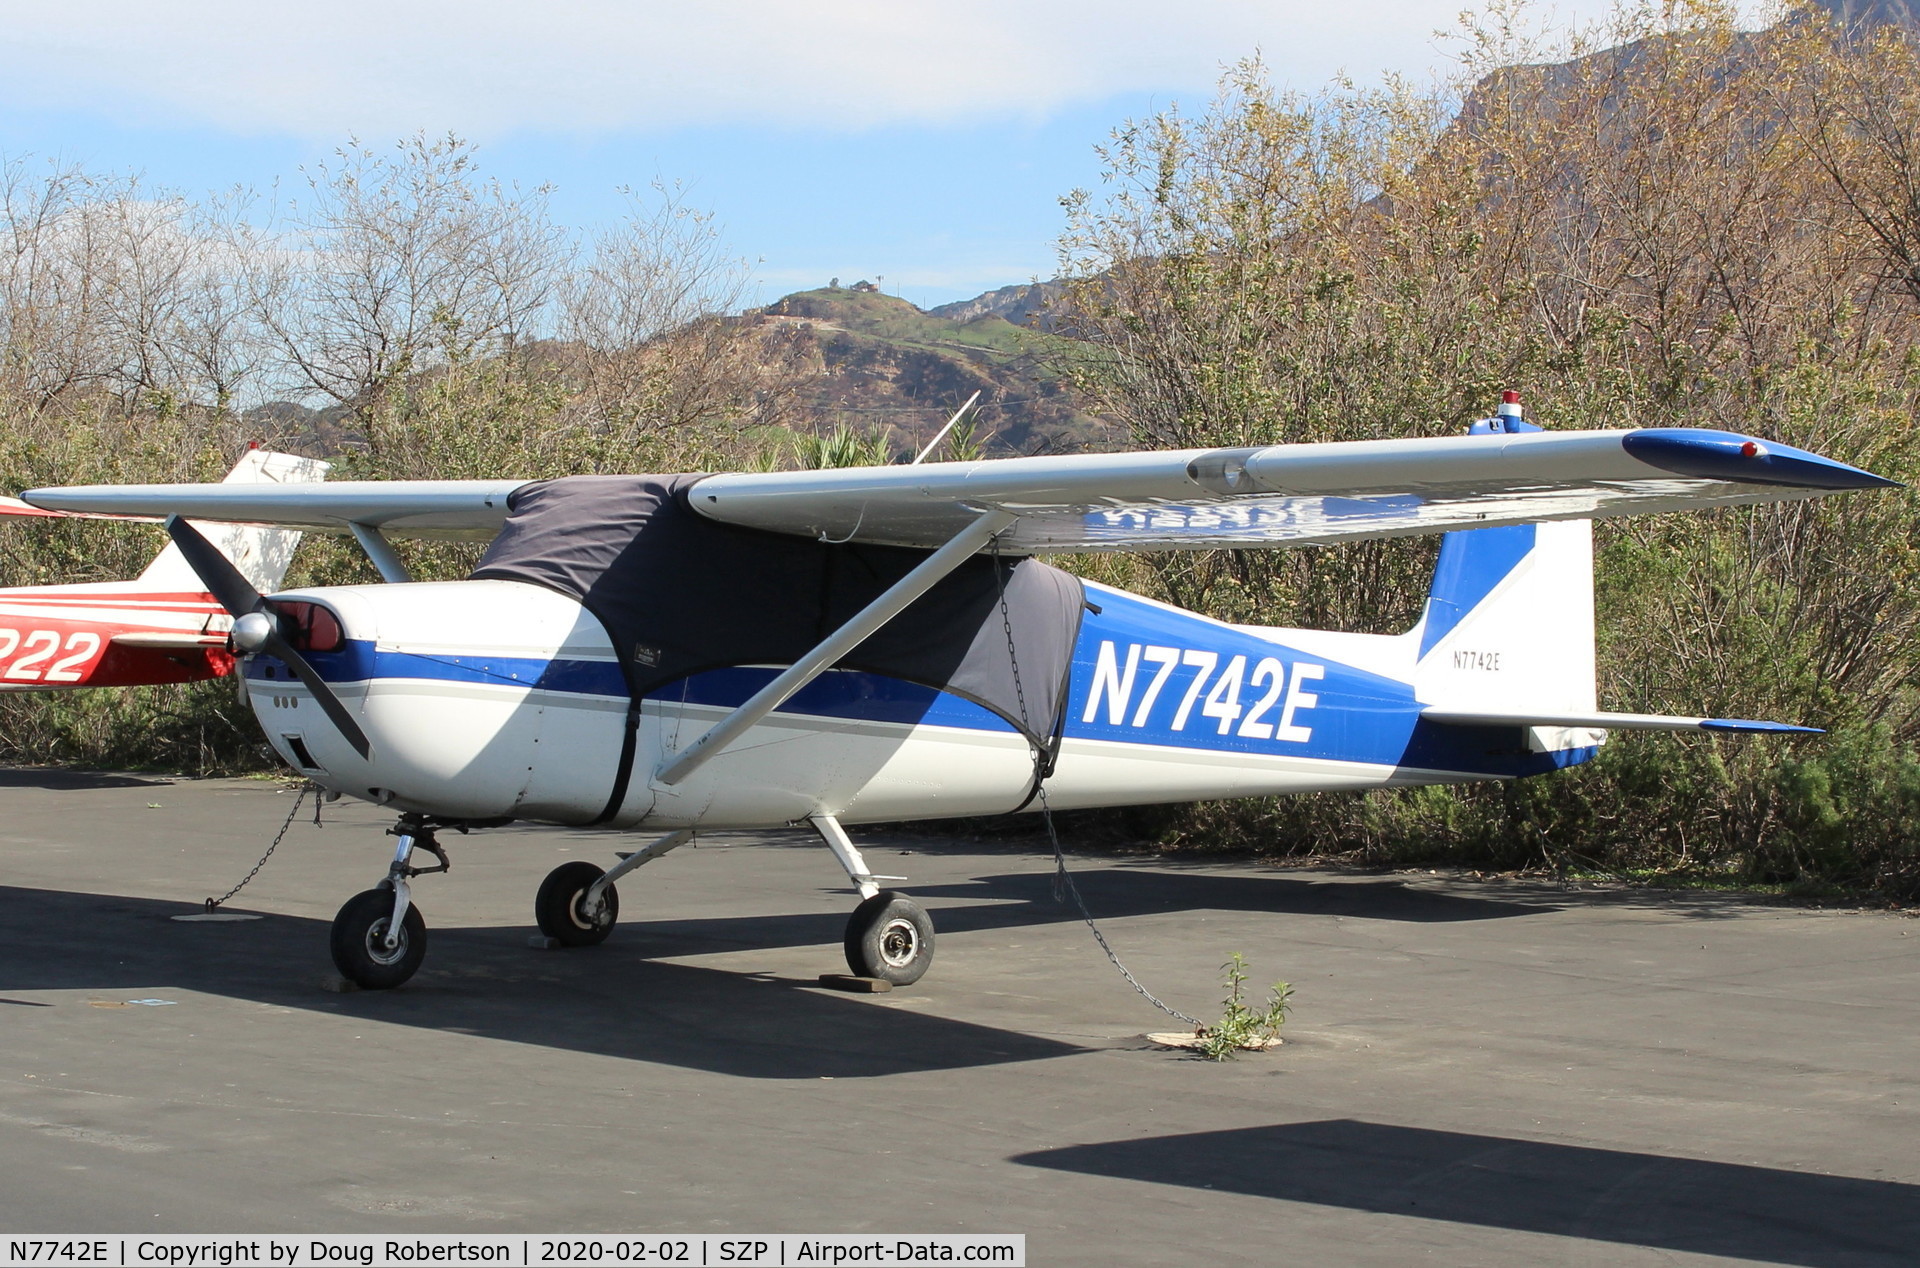 N7742E, 1959 Cessna 150 C/N 17542, 1959 Cessna 150, Continental O-200 100 Hp